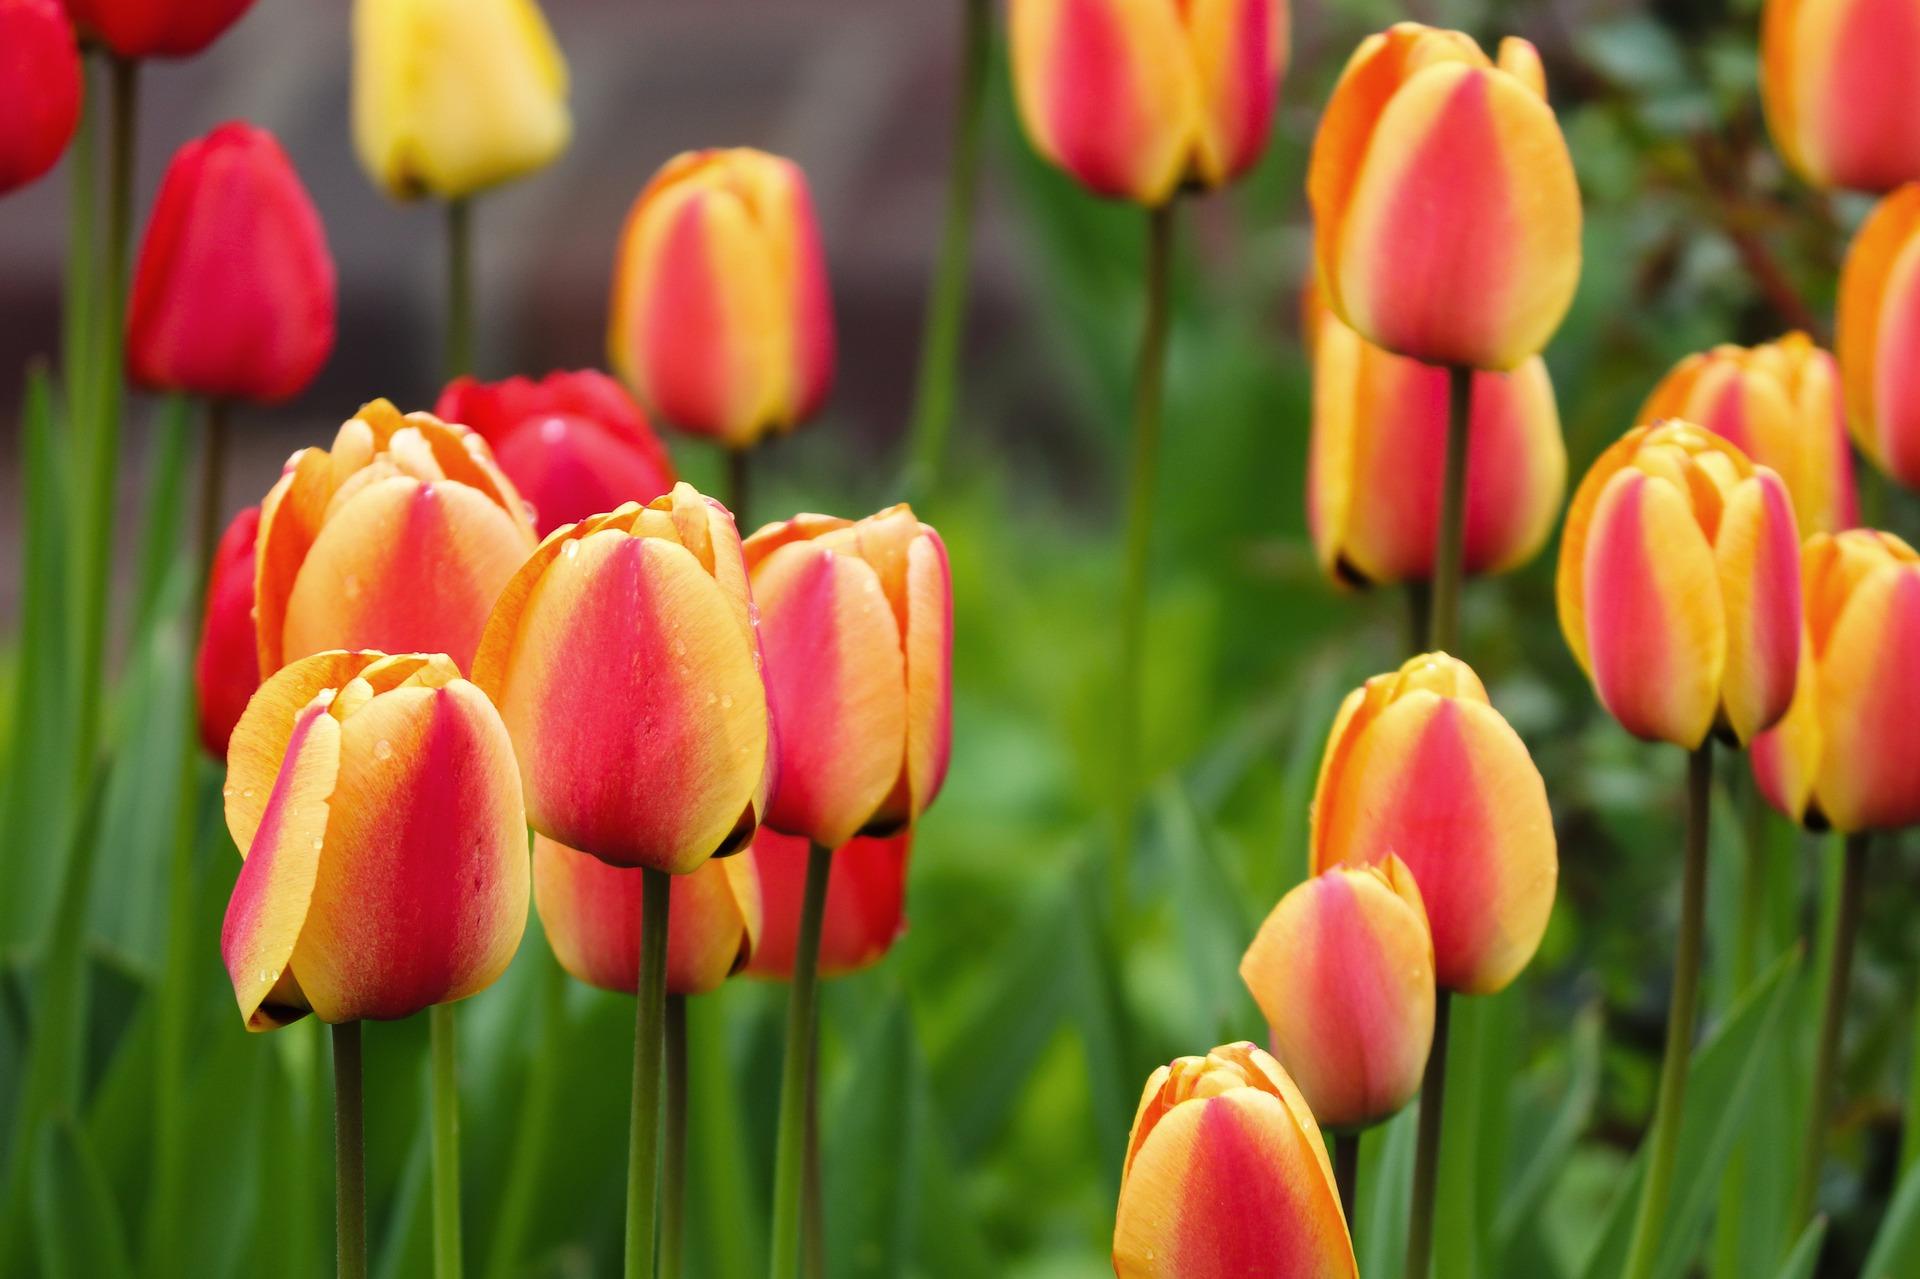 Tulip Darwin Hybrid 'Apeldoorn's Elite' - Tulip from Leo Berbee Bulb Company